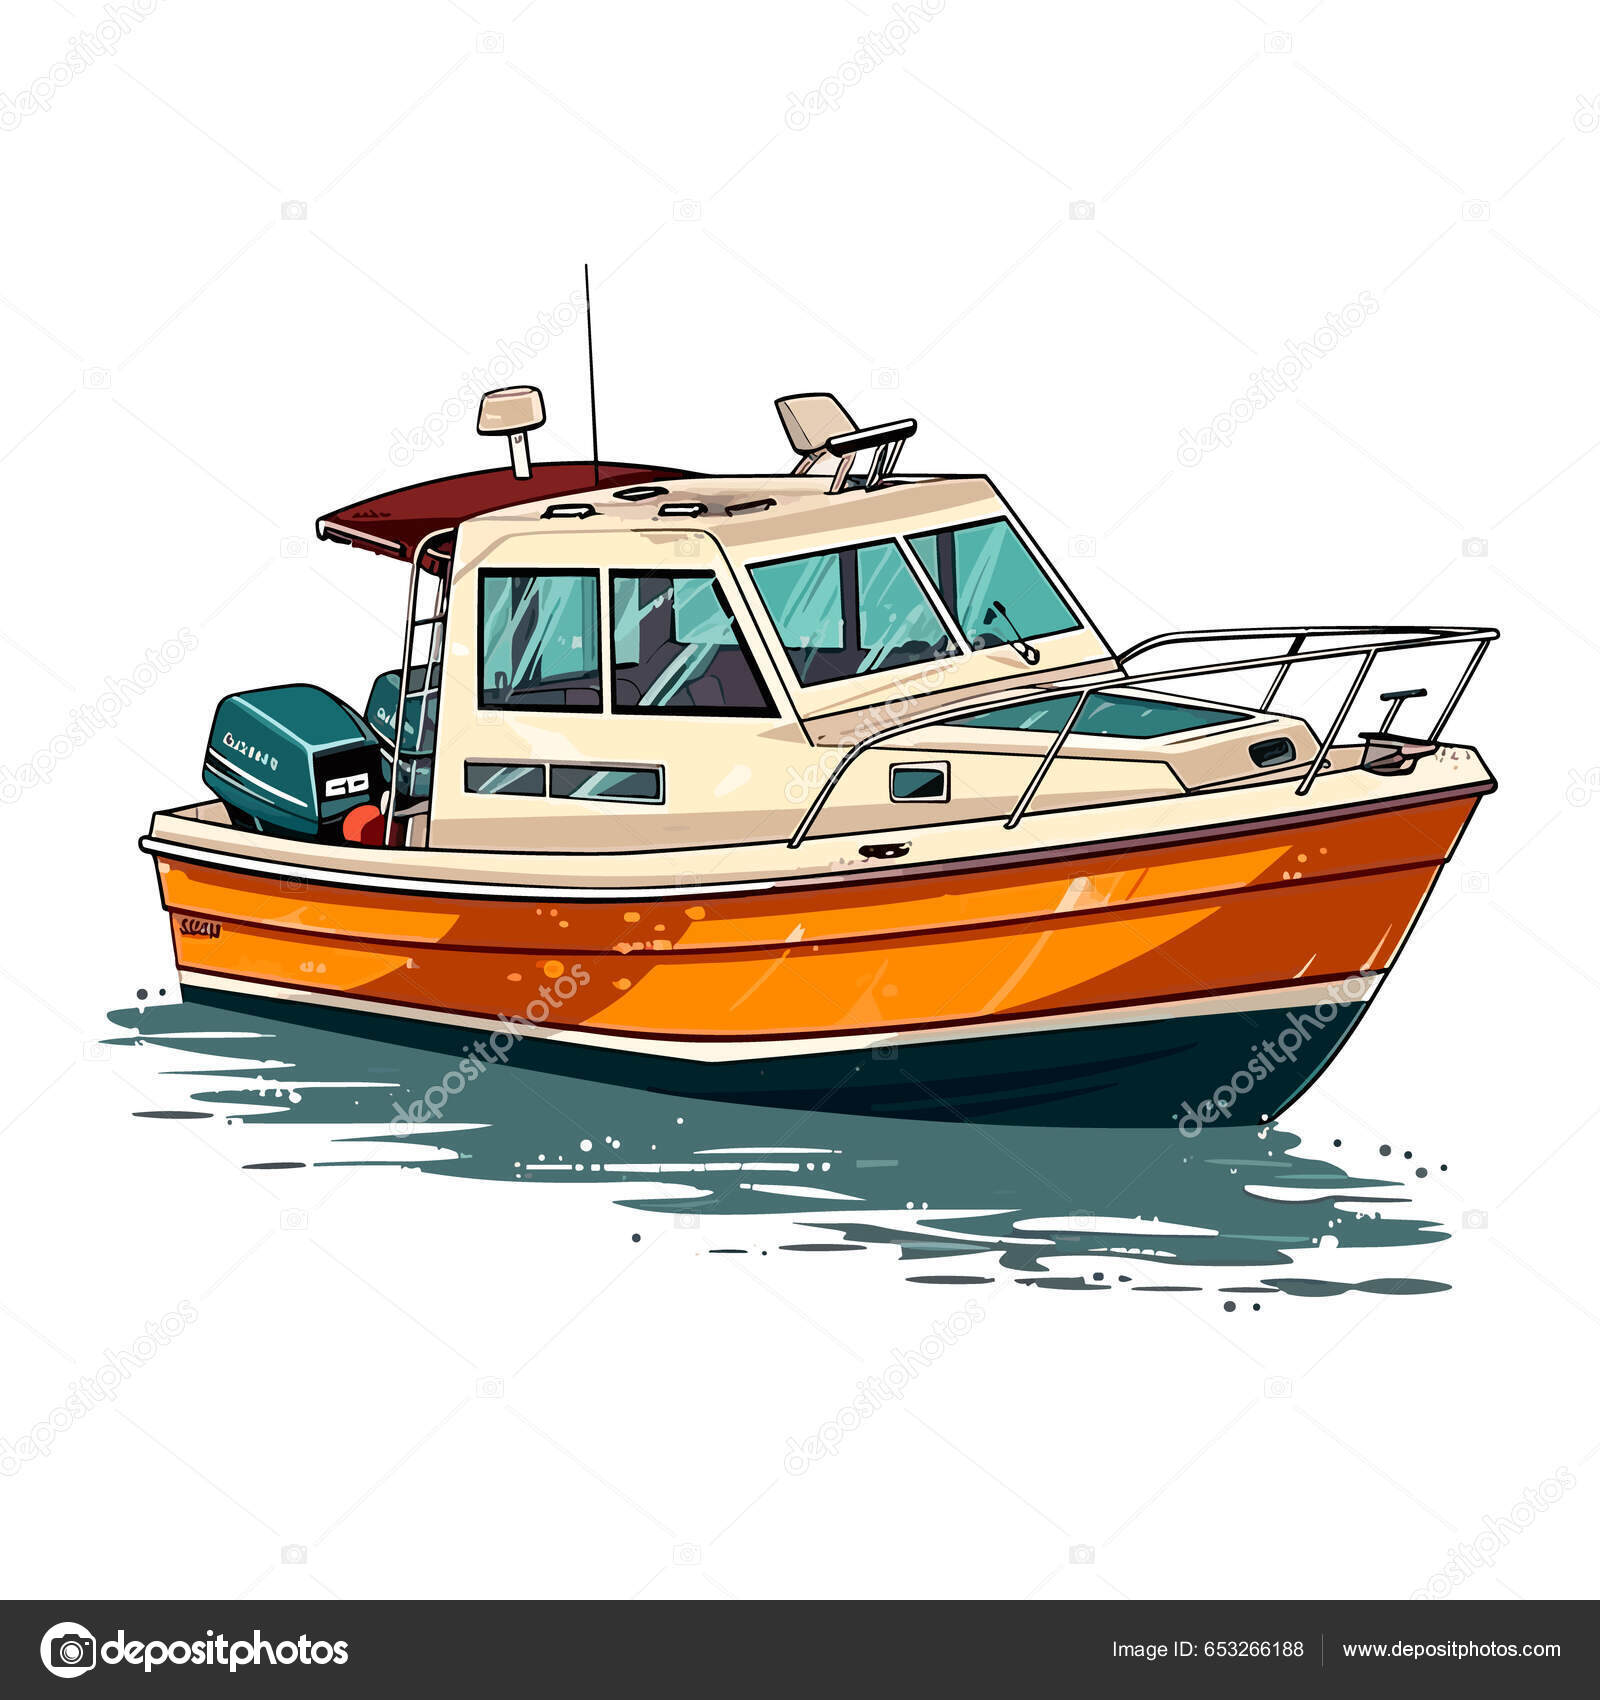 Motor Boat Divers Fishermen Small Tourist Excursion Boat Cartoon